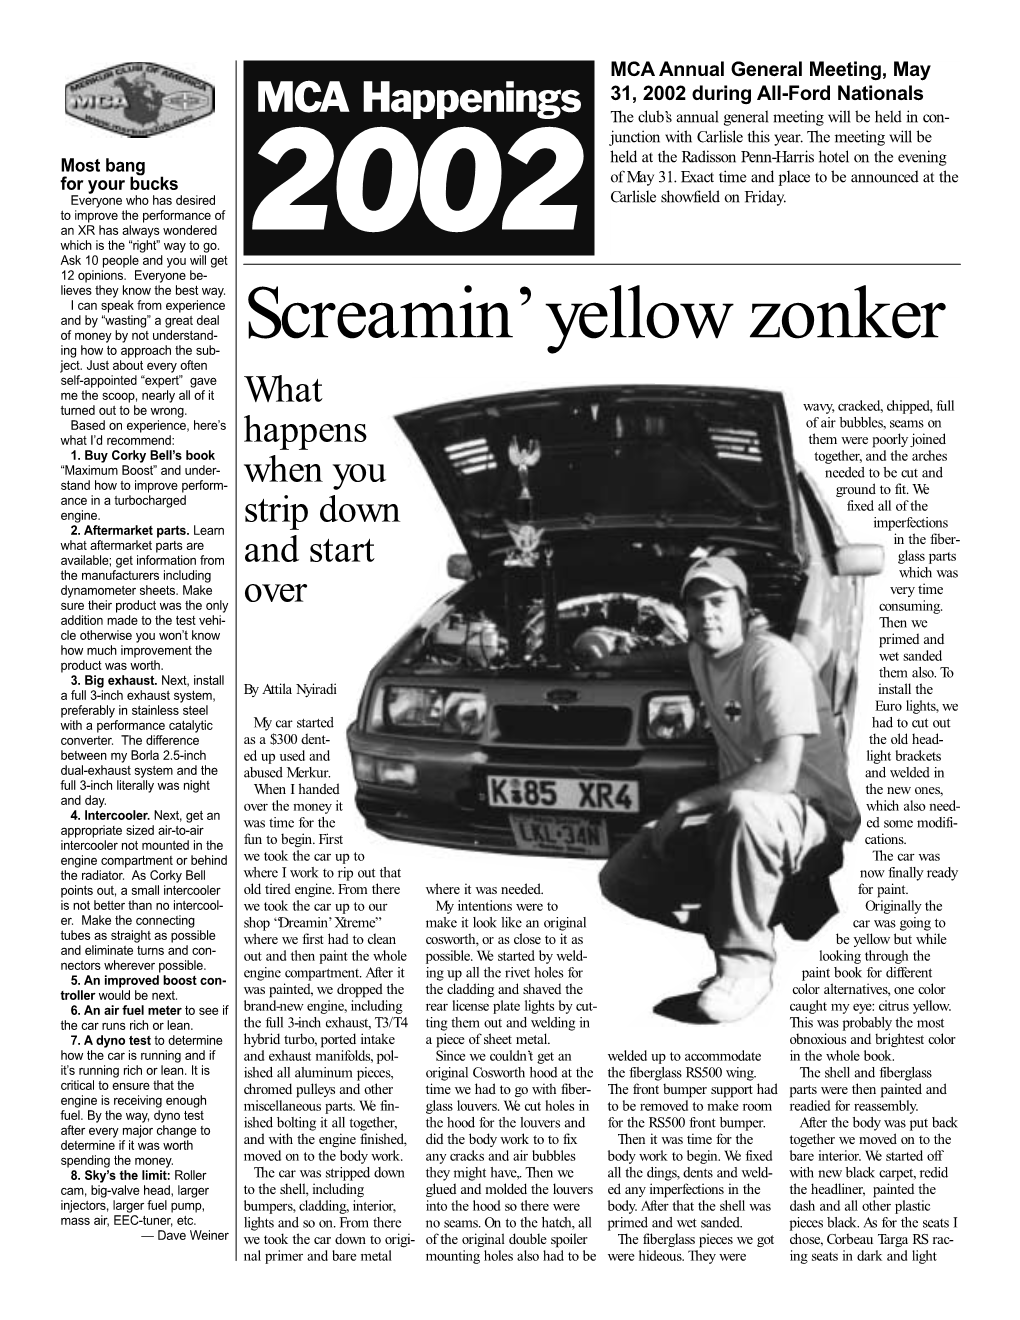 Screamin' Yellow Zonker